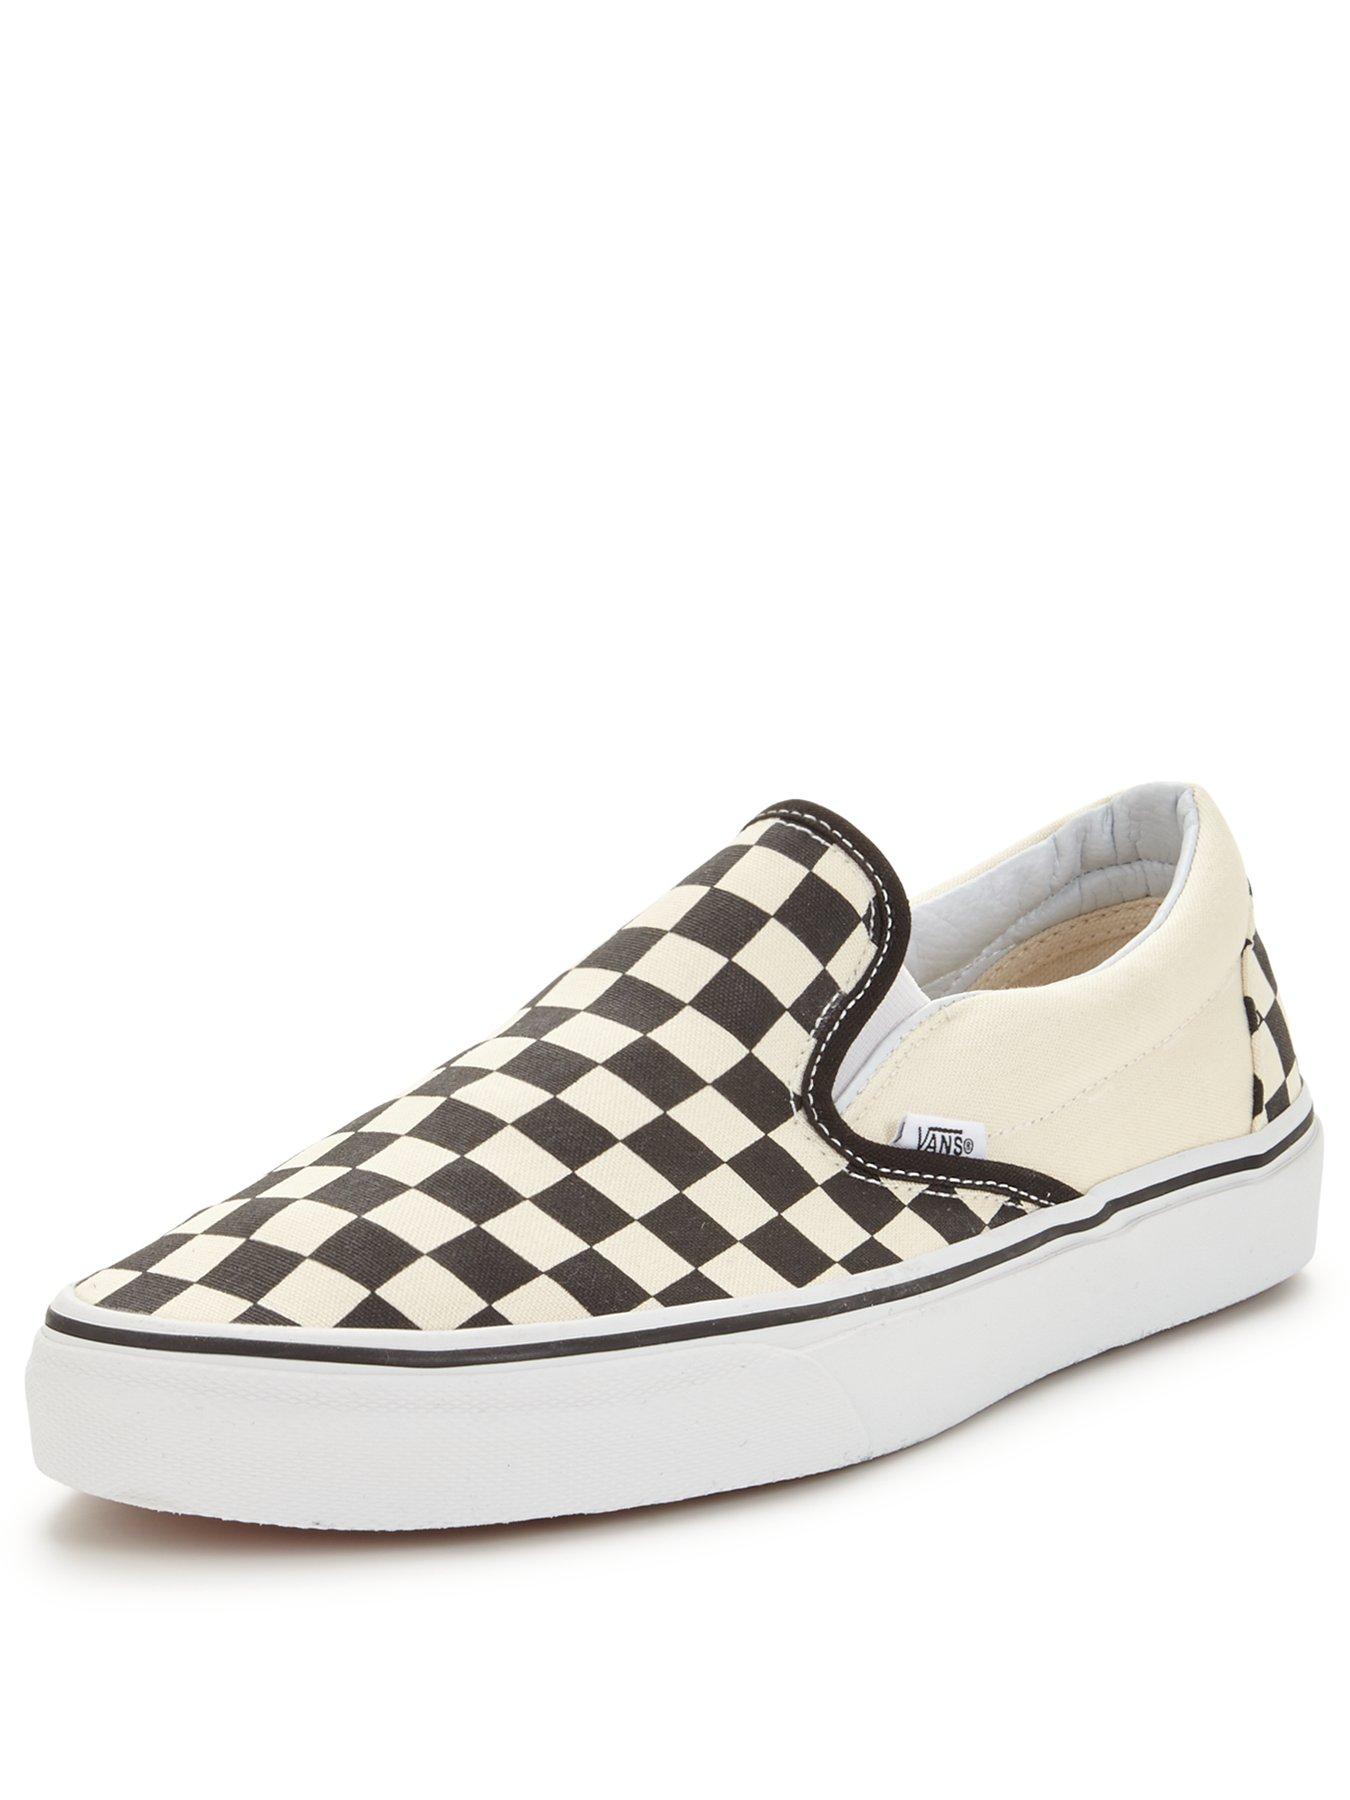 Vans Classic Checkerboard Slip-On Plimsolls - Black/White | very.co.uk